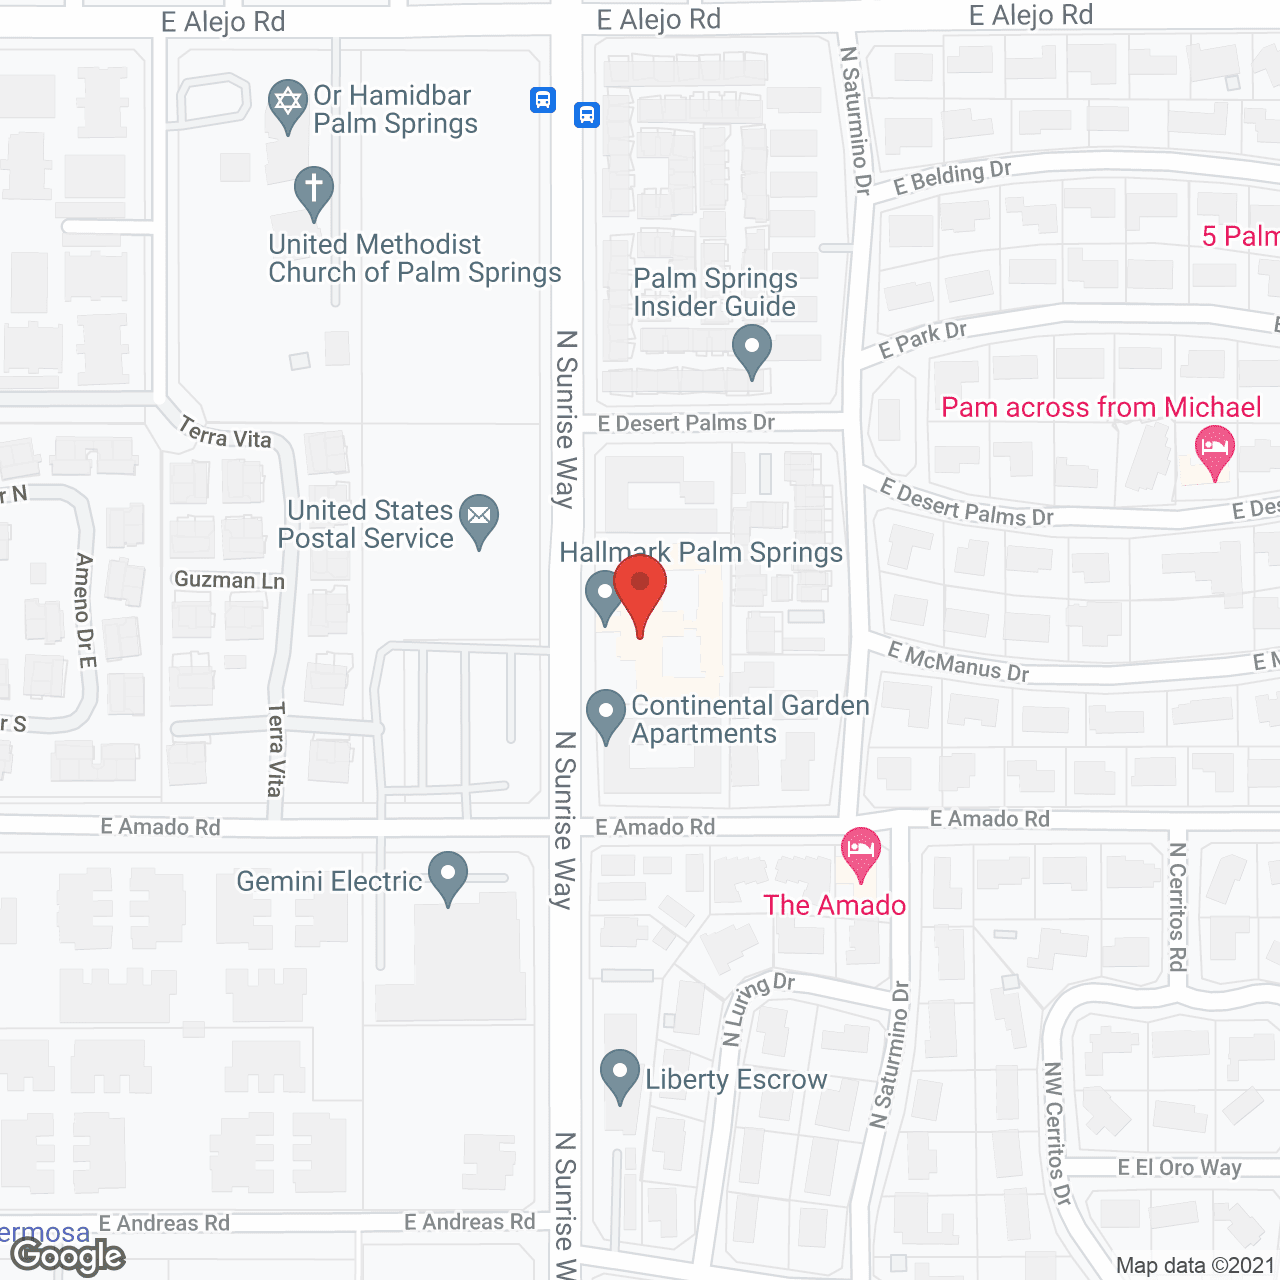 Hallmark Palm Springs in google map